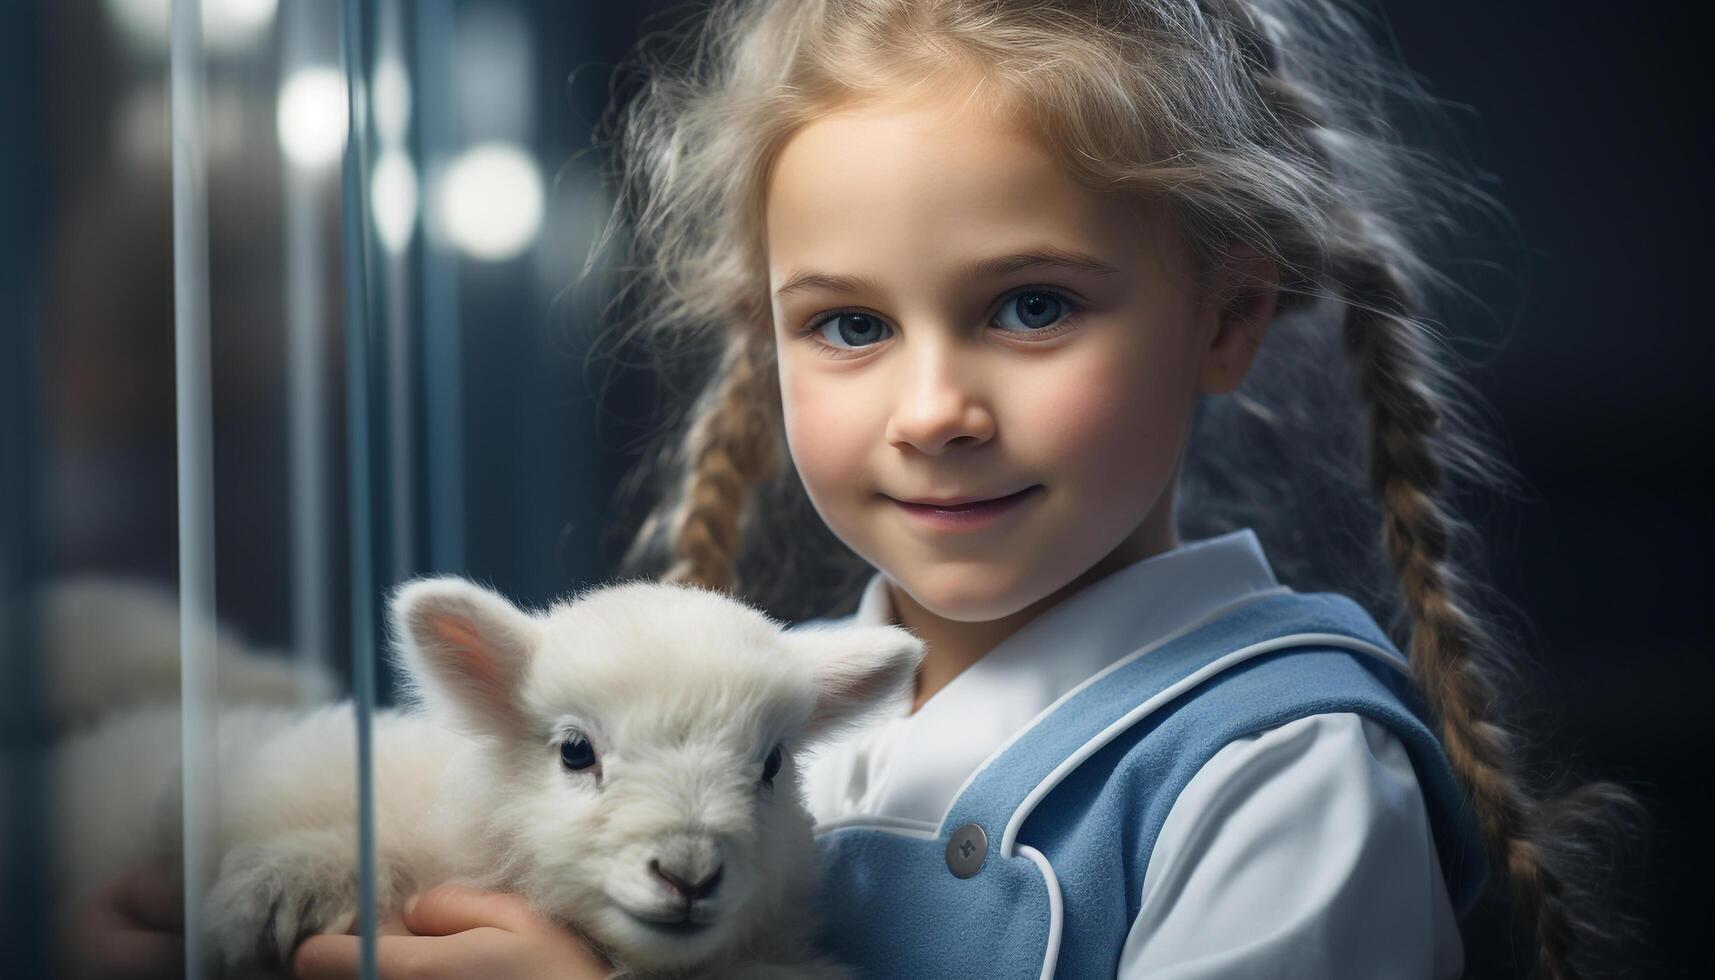 AI generated Cute child smiling, holding fluffy rabbit, joyful childhood on farm generated by AI photo